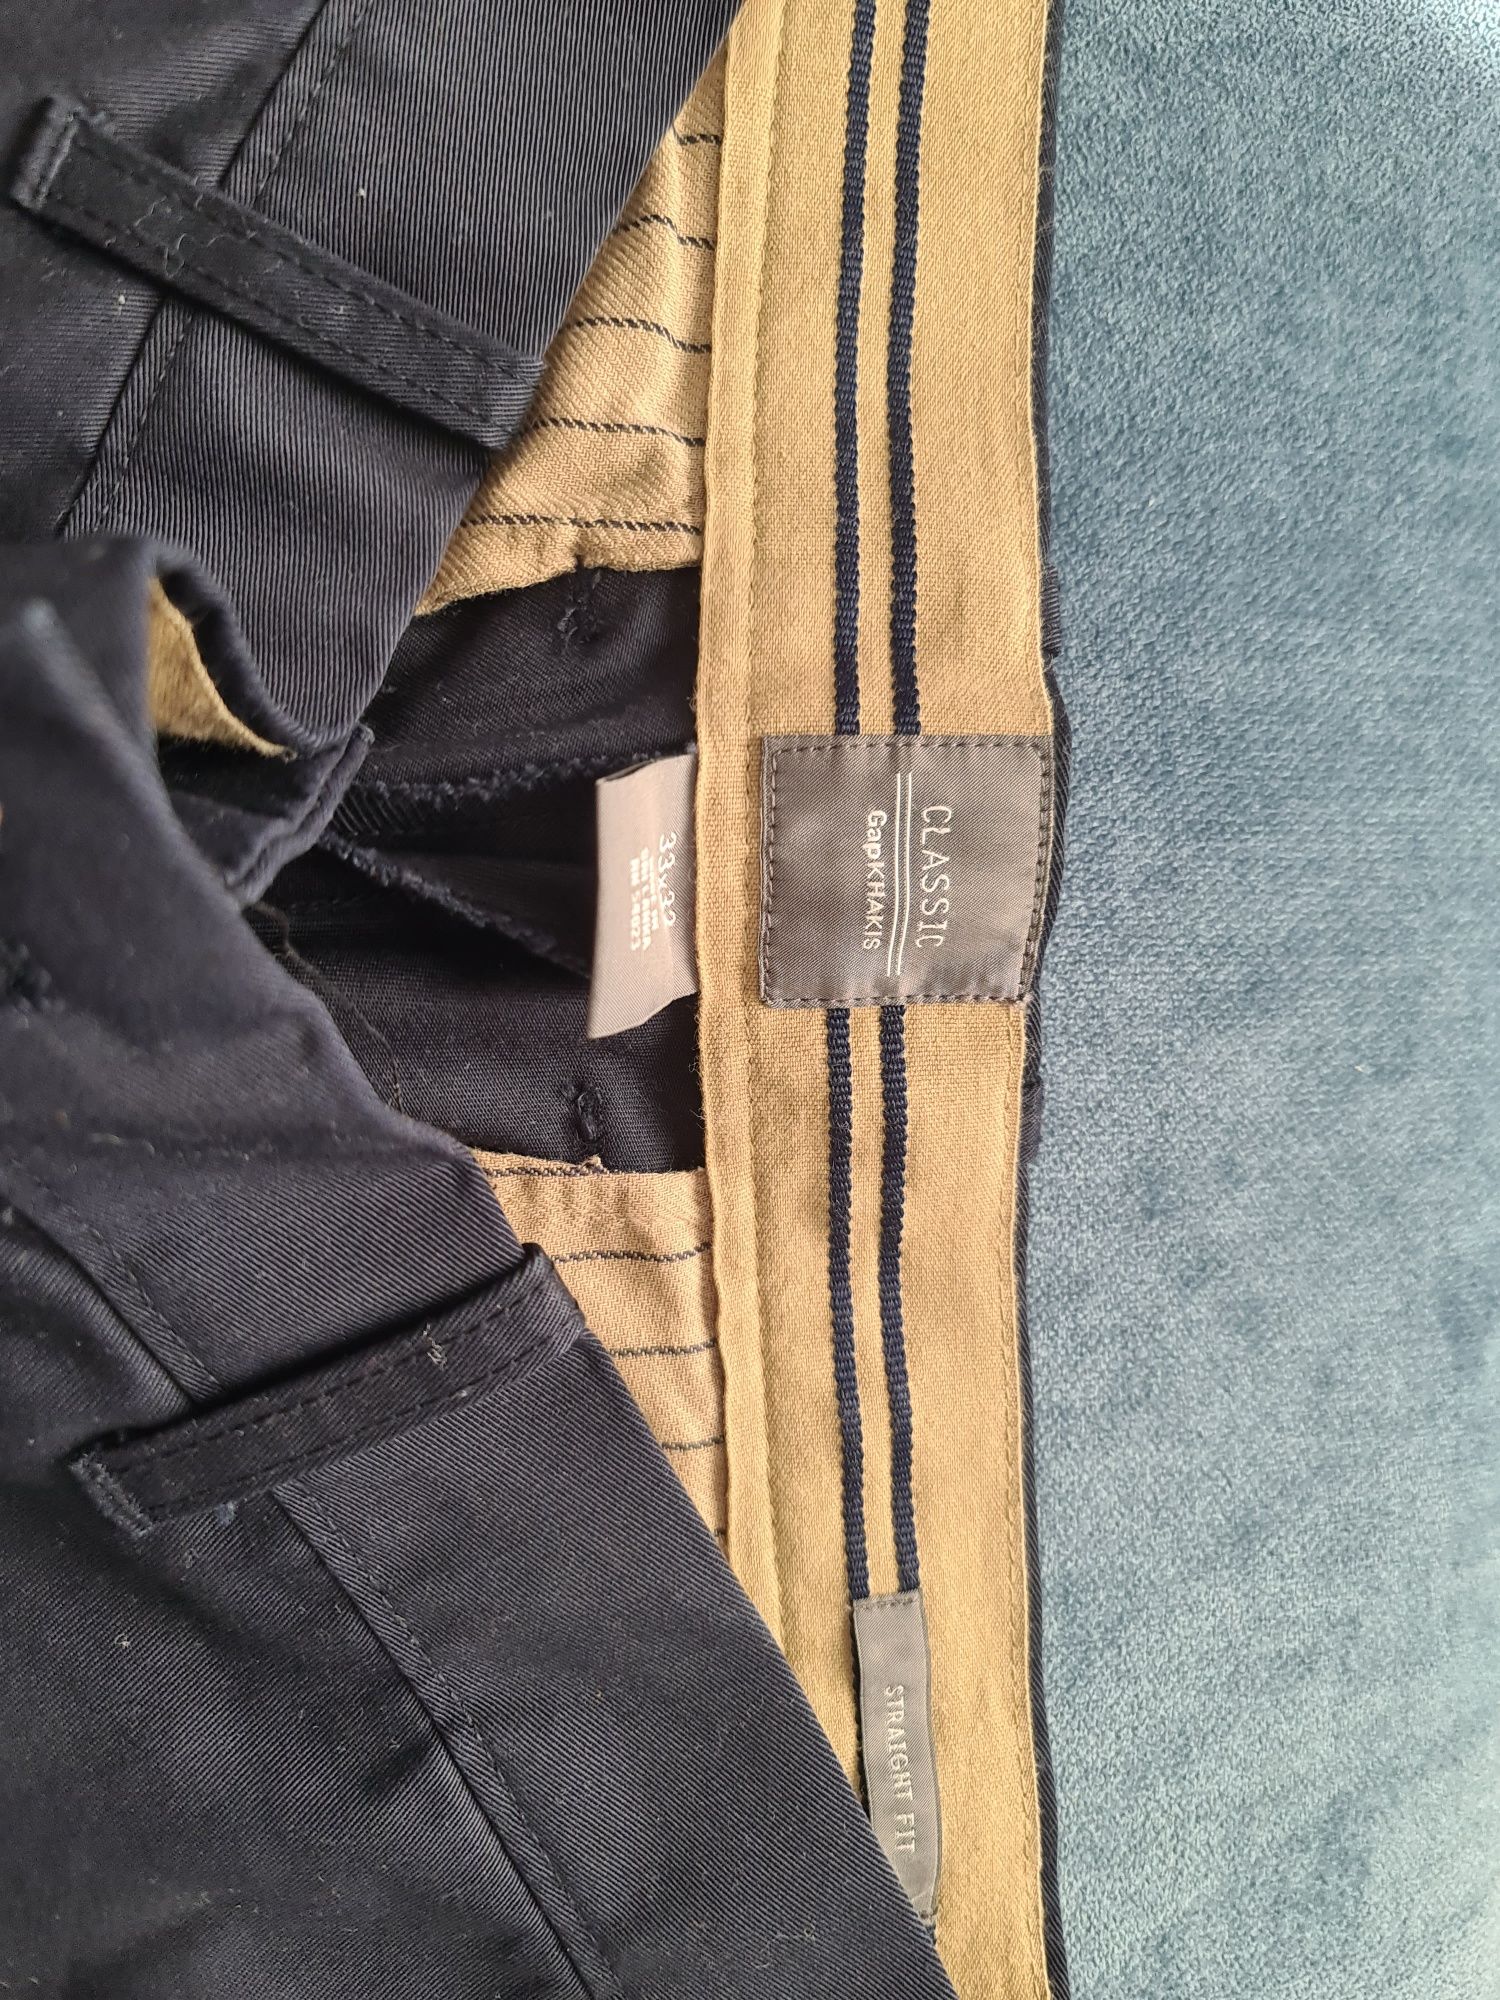 Pantaloni Gap classic, straight fit 33/32